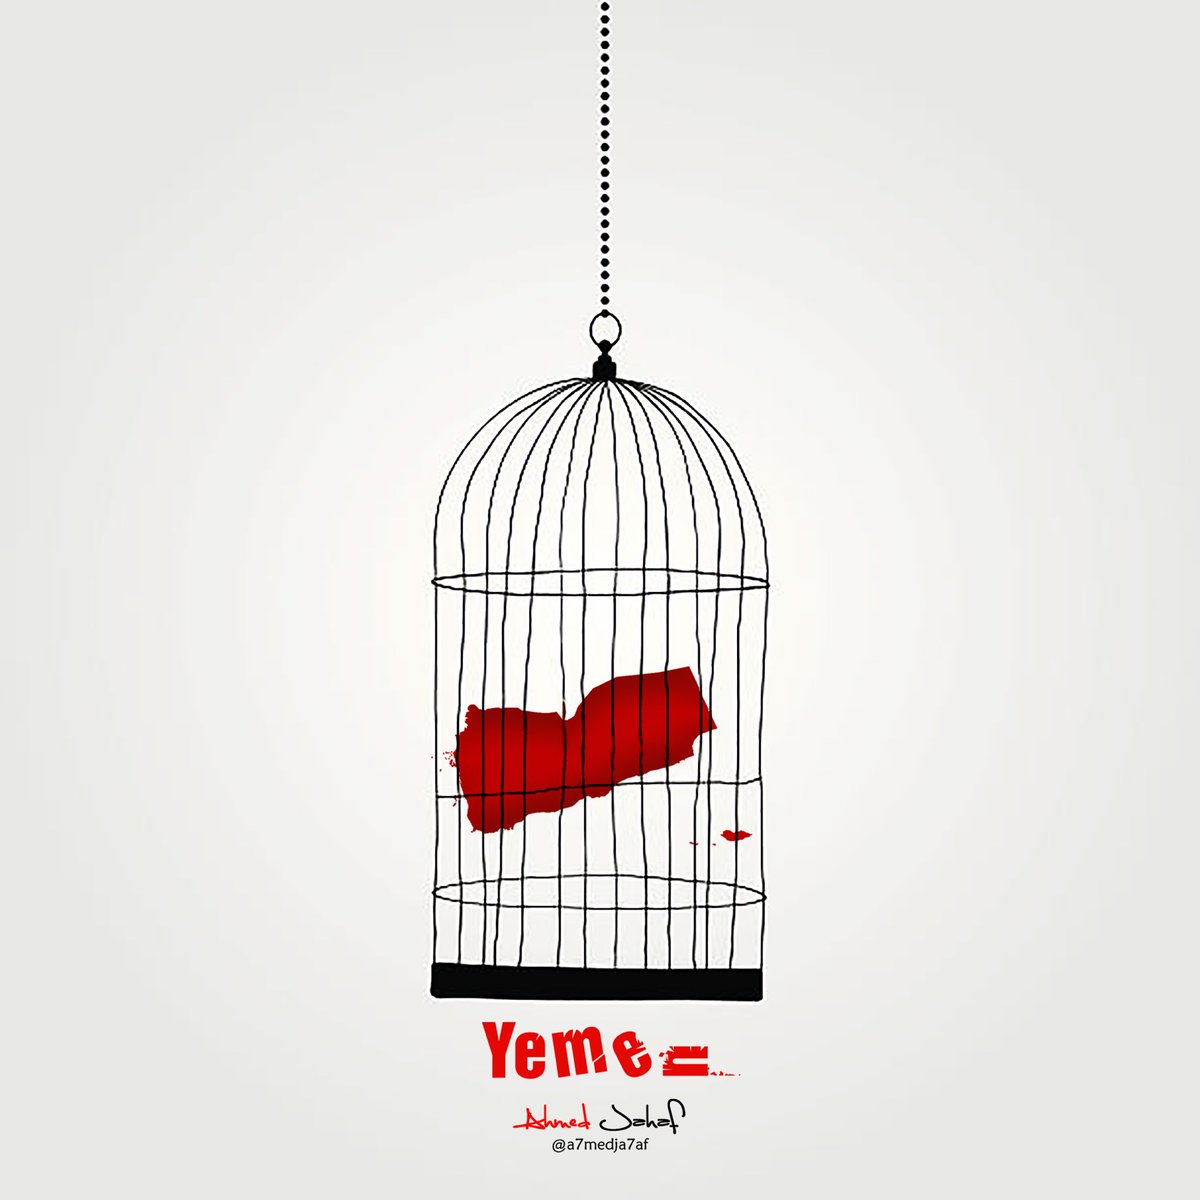 Save Yemen = Save your humanit